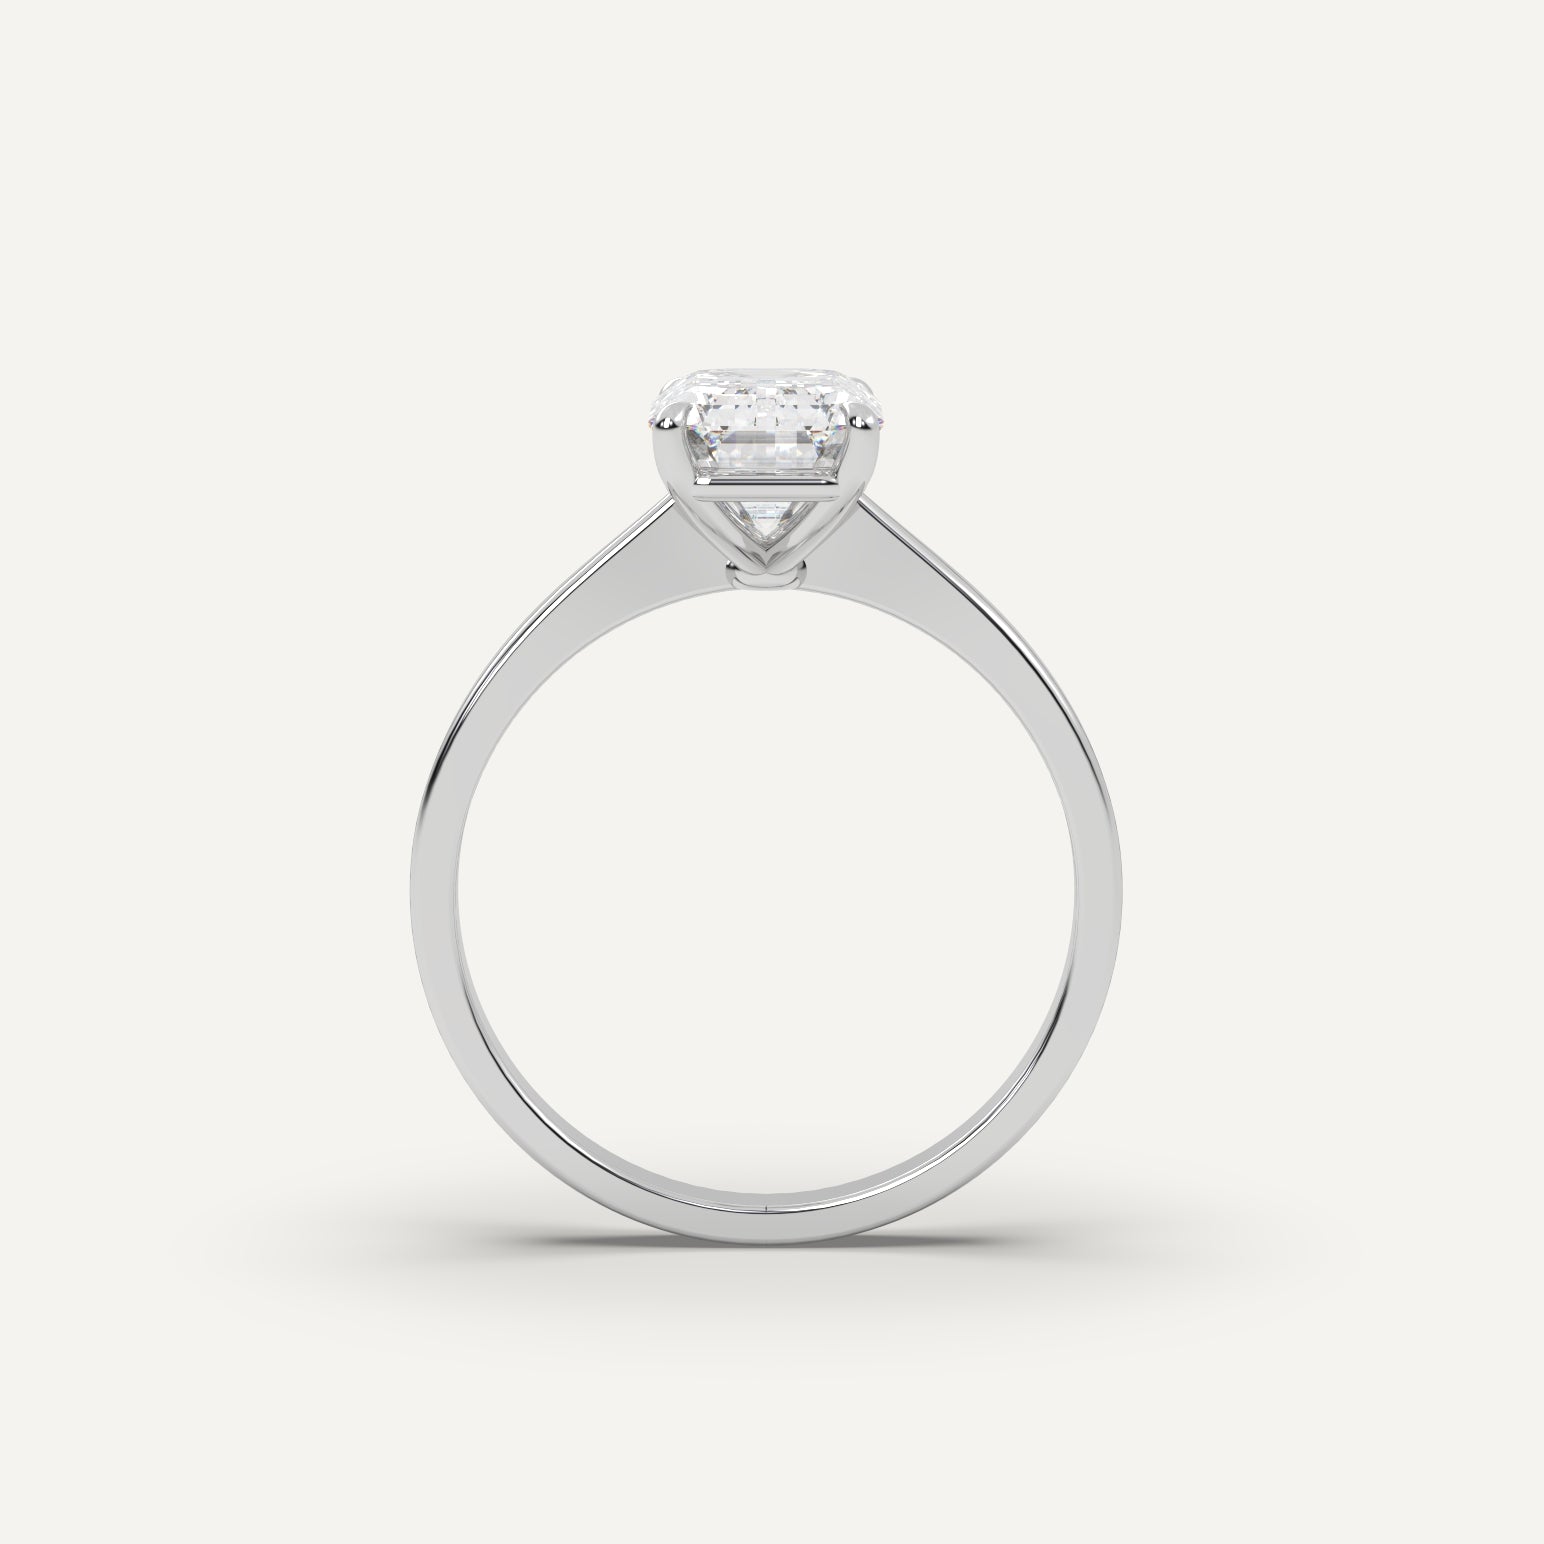 Emerald Cut Diamond Engagement Ring - 4 carat